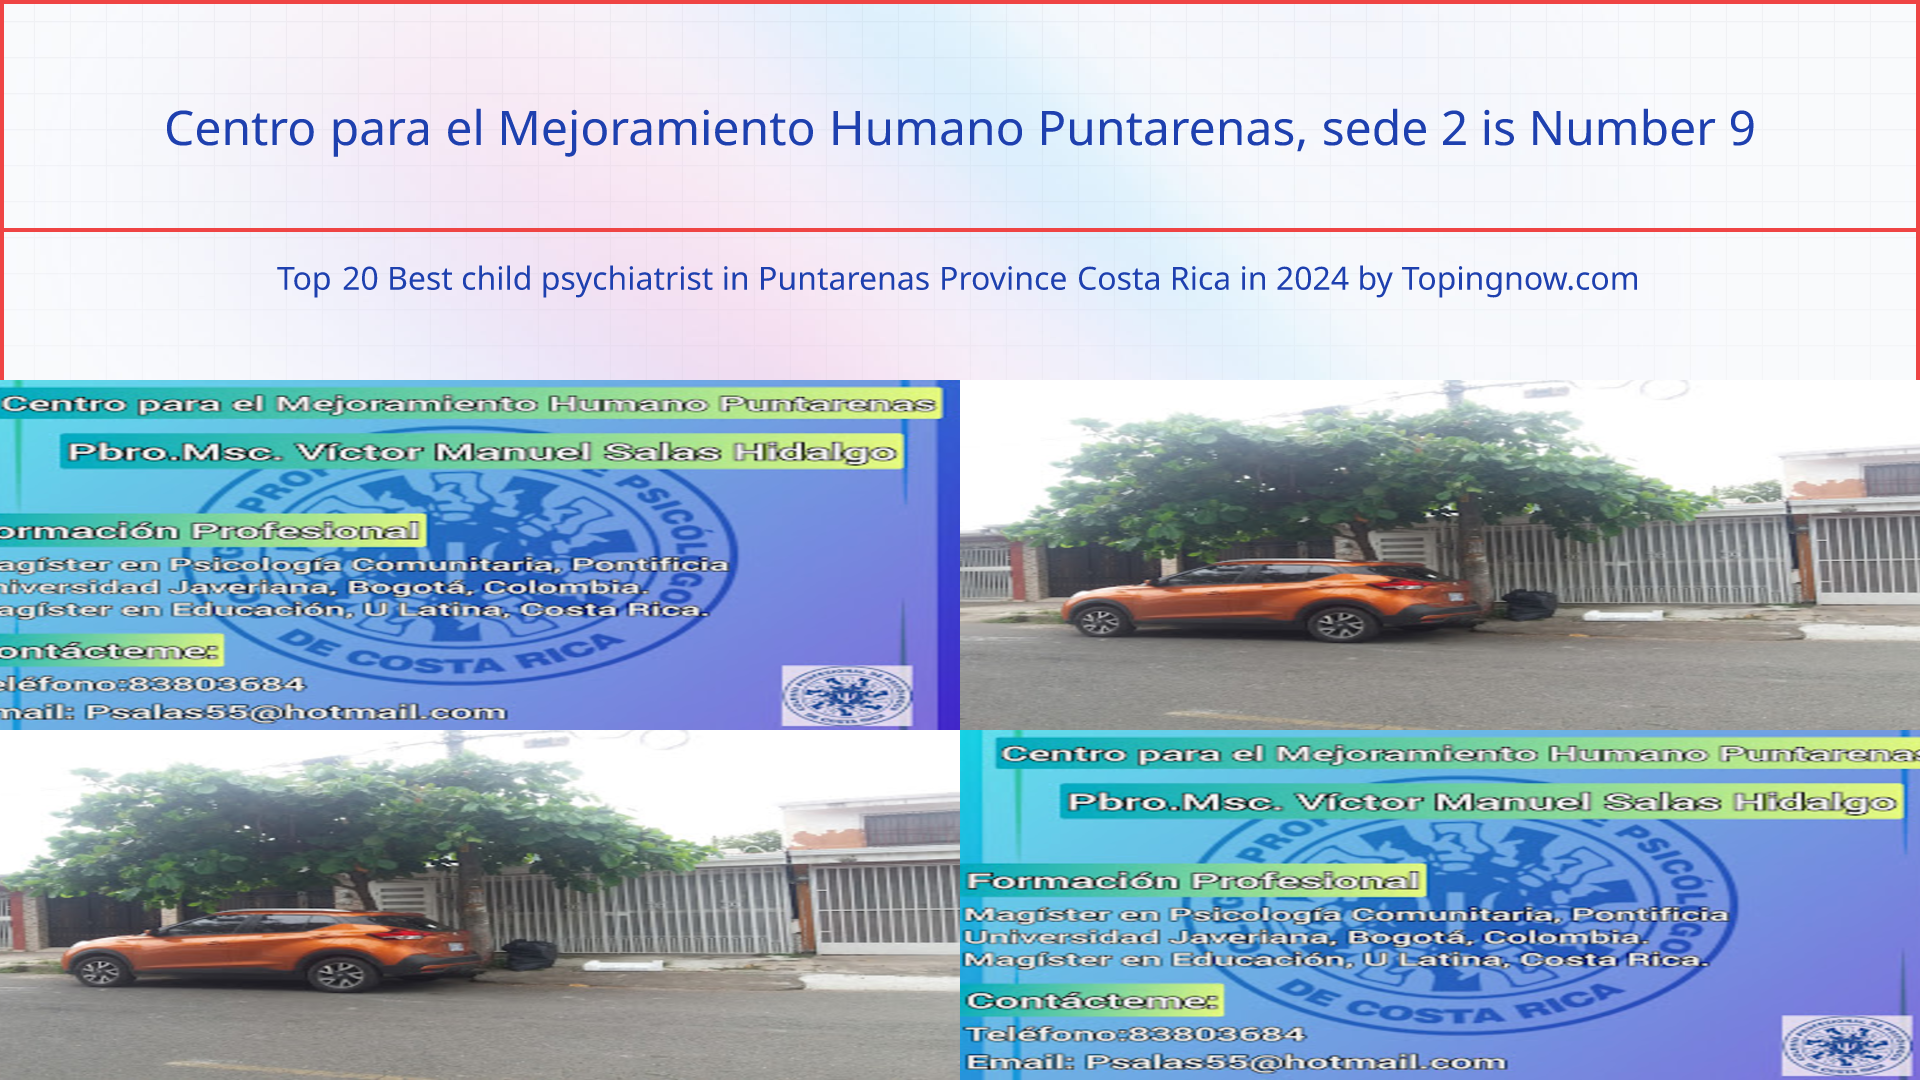 Centro para el Mejoramiento Humano Puntarenas, sede 2: Top 20 Best child psychiatrist in Puntarenas Province Costa Rica in 2024